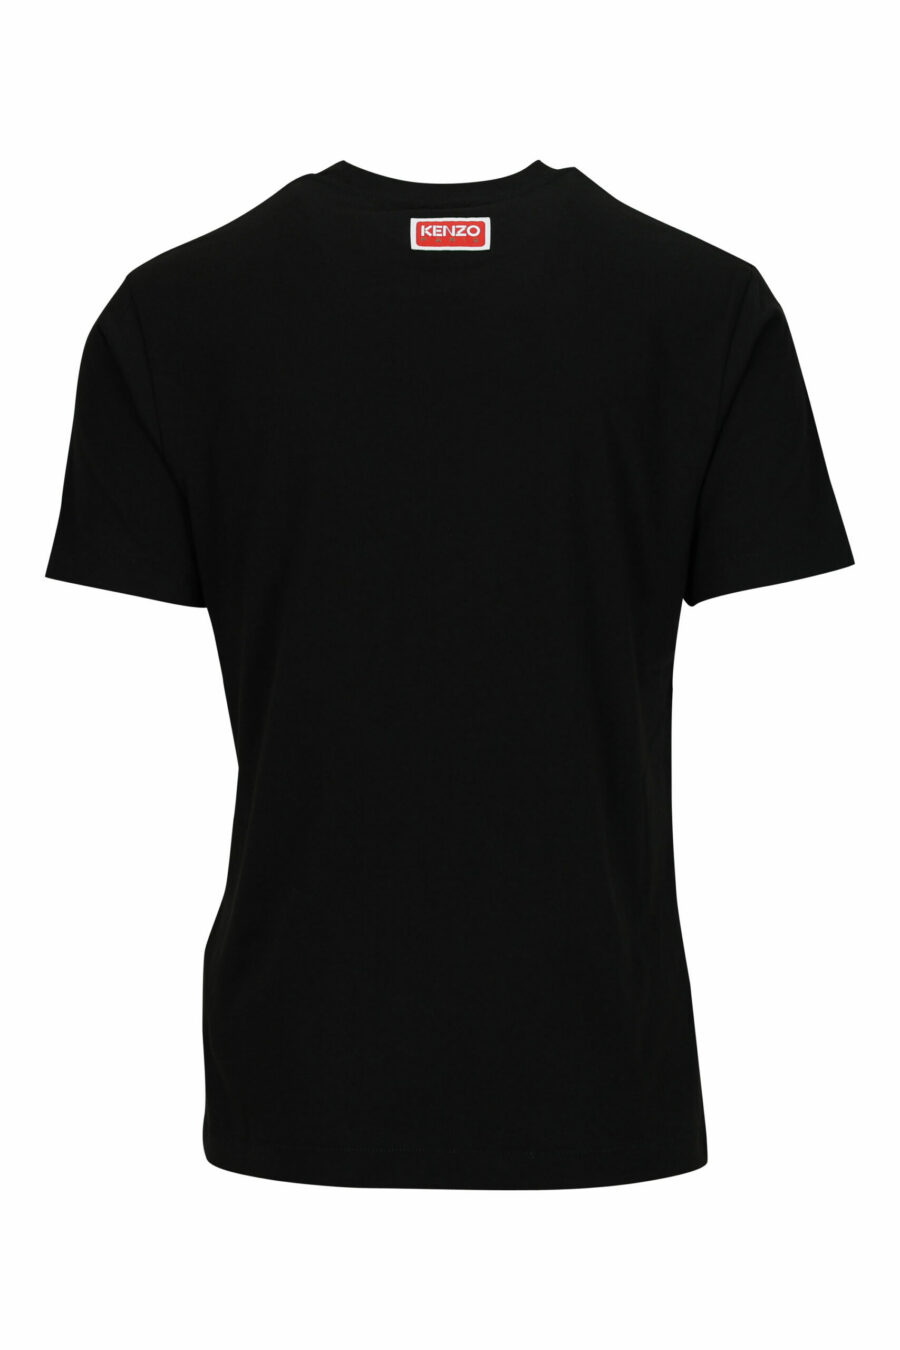 Camiseta negra "oversize" logo pequeño tigre relieve - 3612230571686 1 scaled